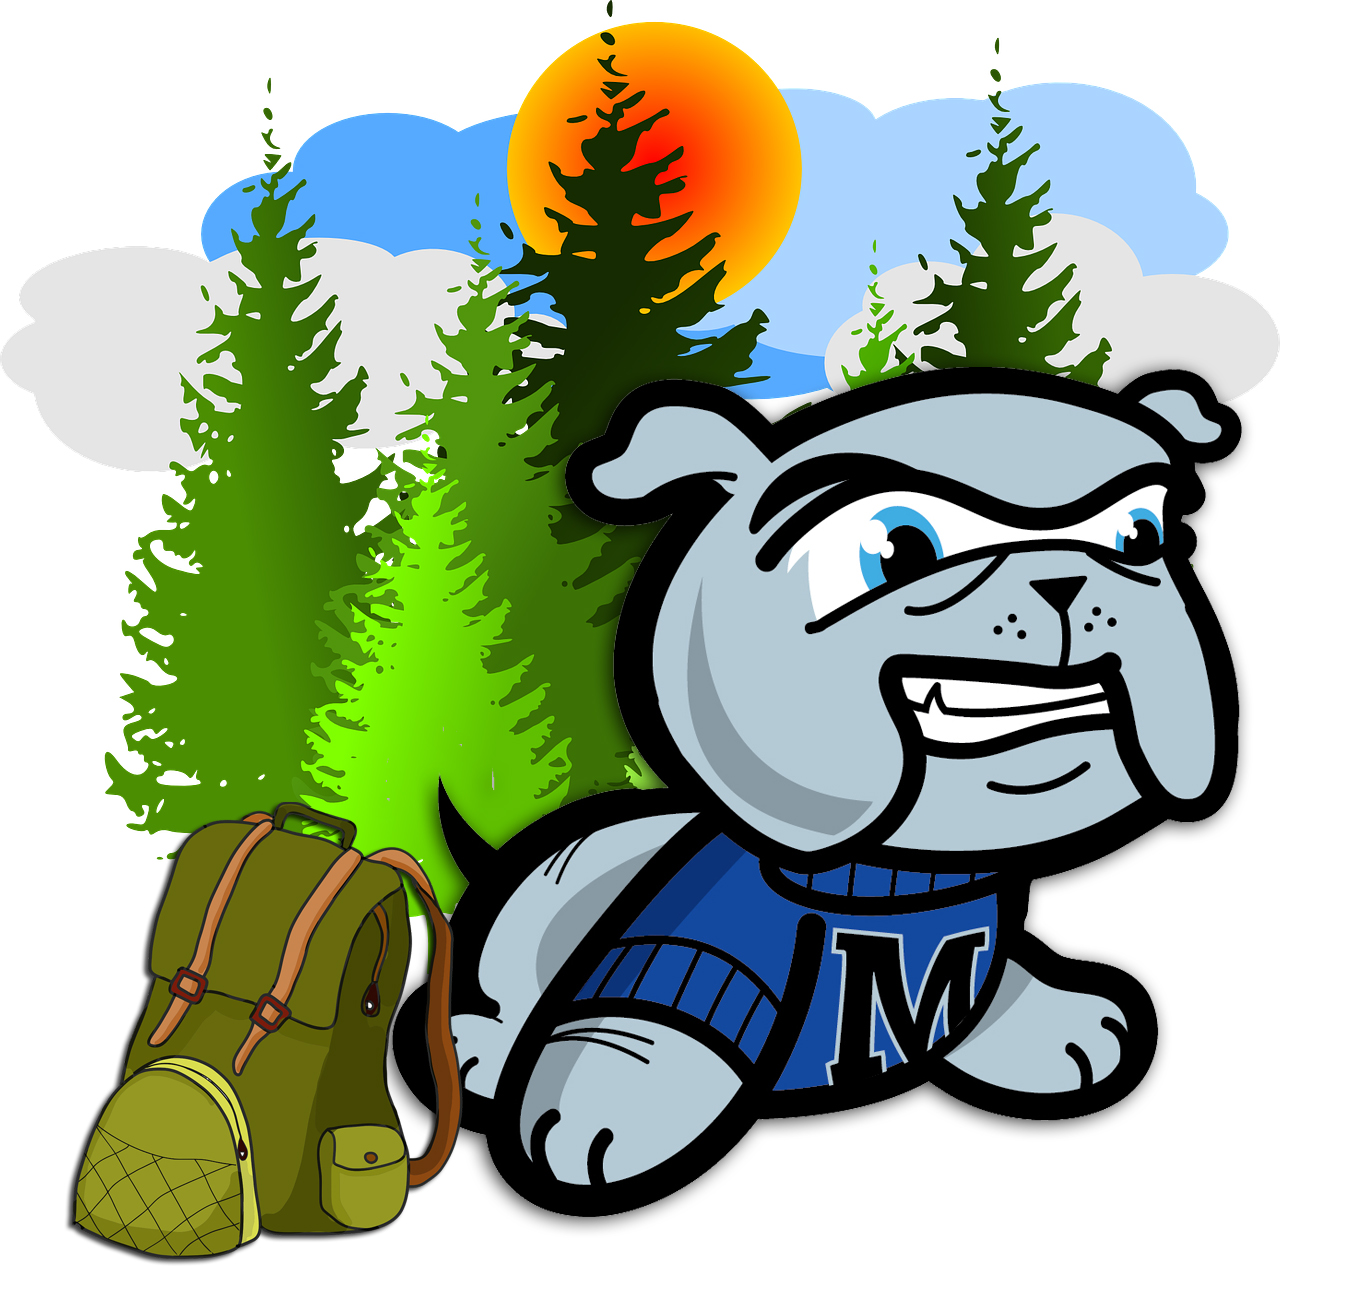 Bulldog mascot in the wilderness